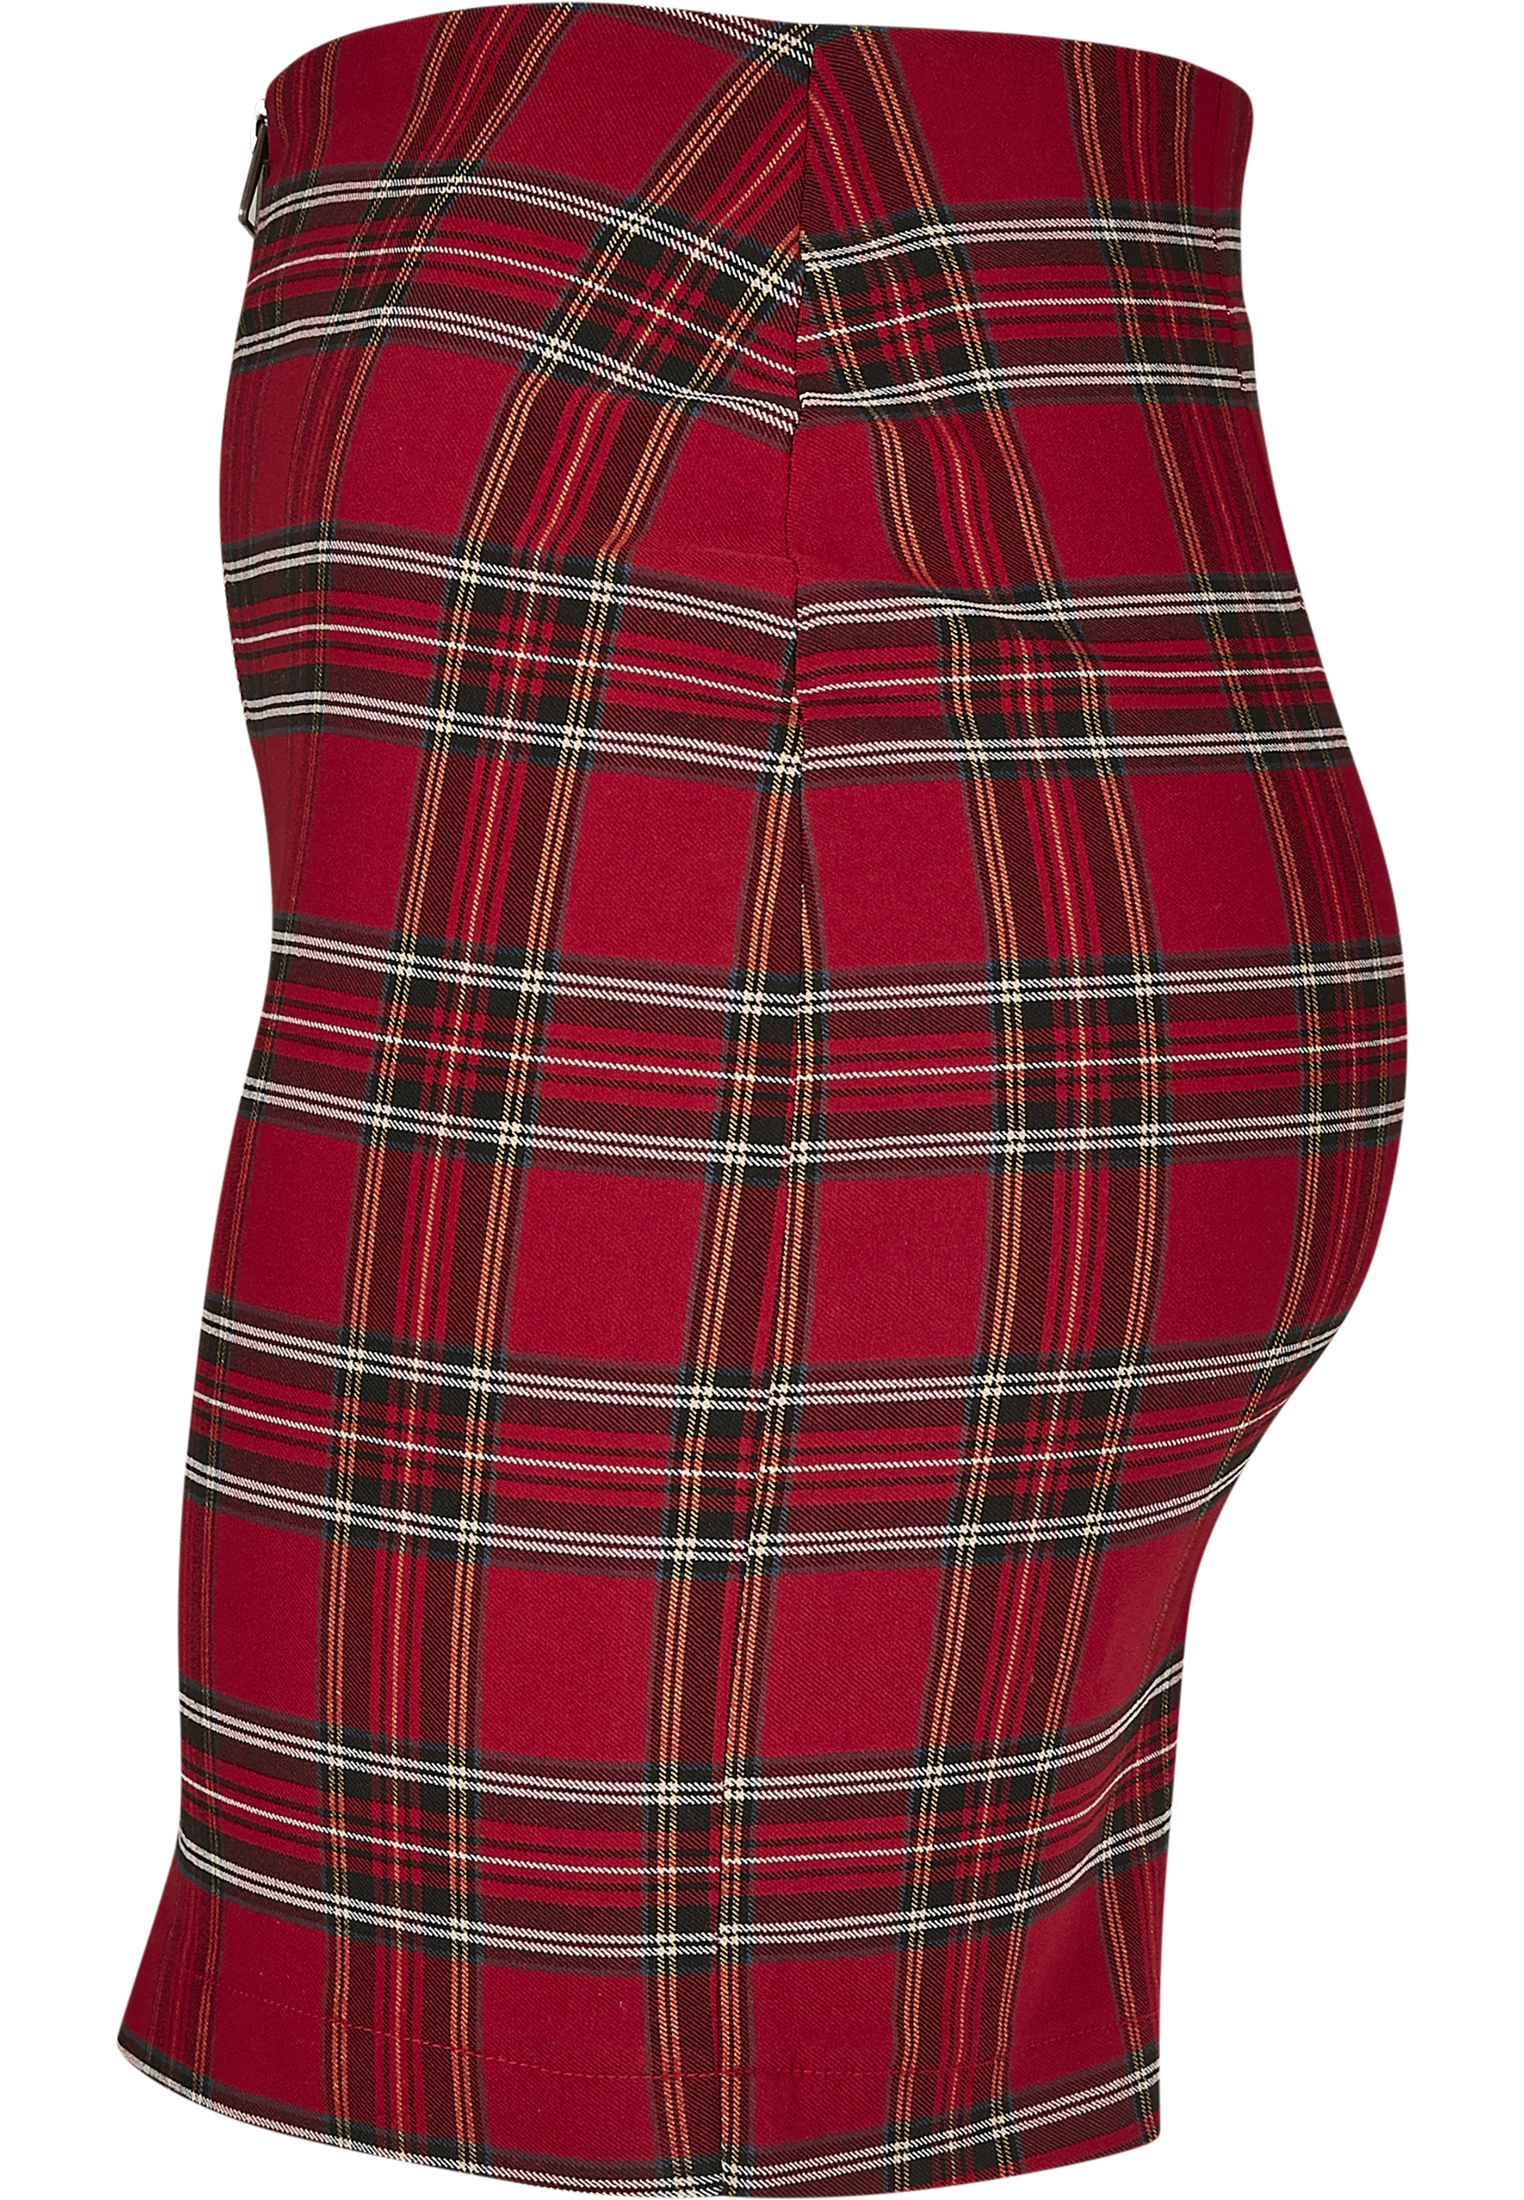 Kleider & R?cke Ladies Short Checker Skirt in Farbe red/blk